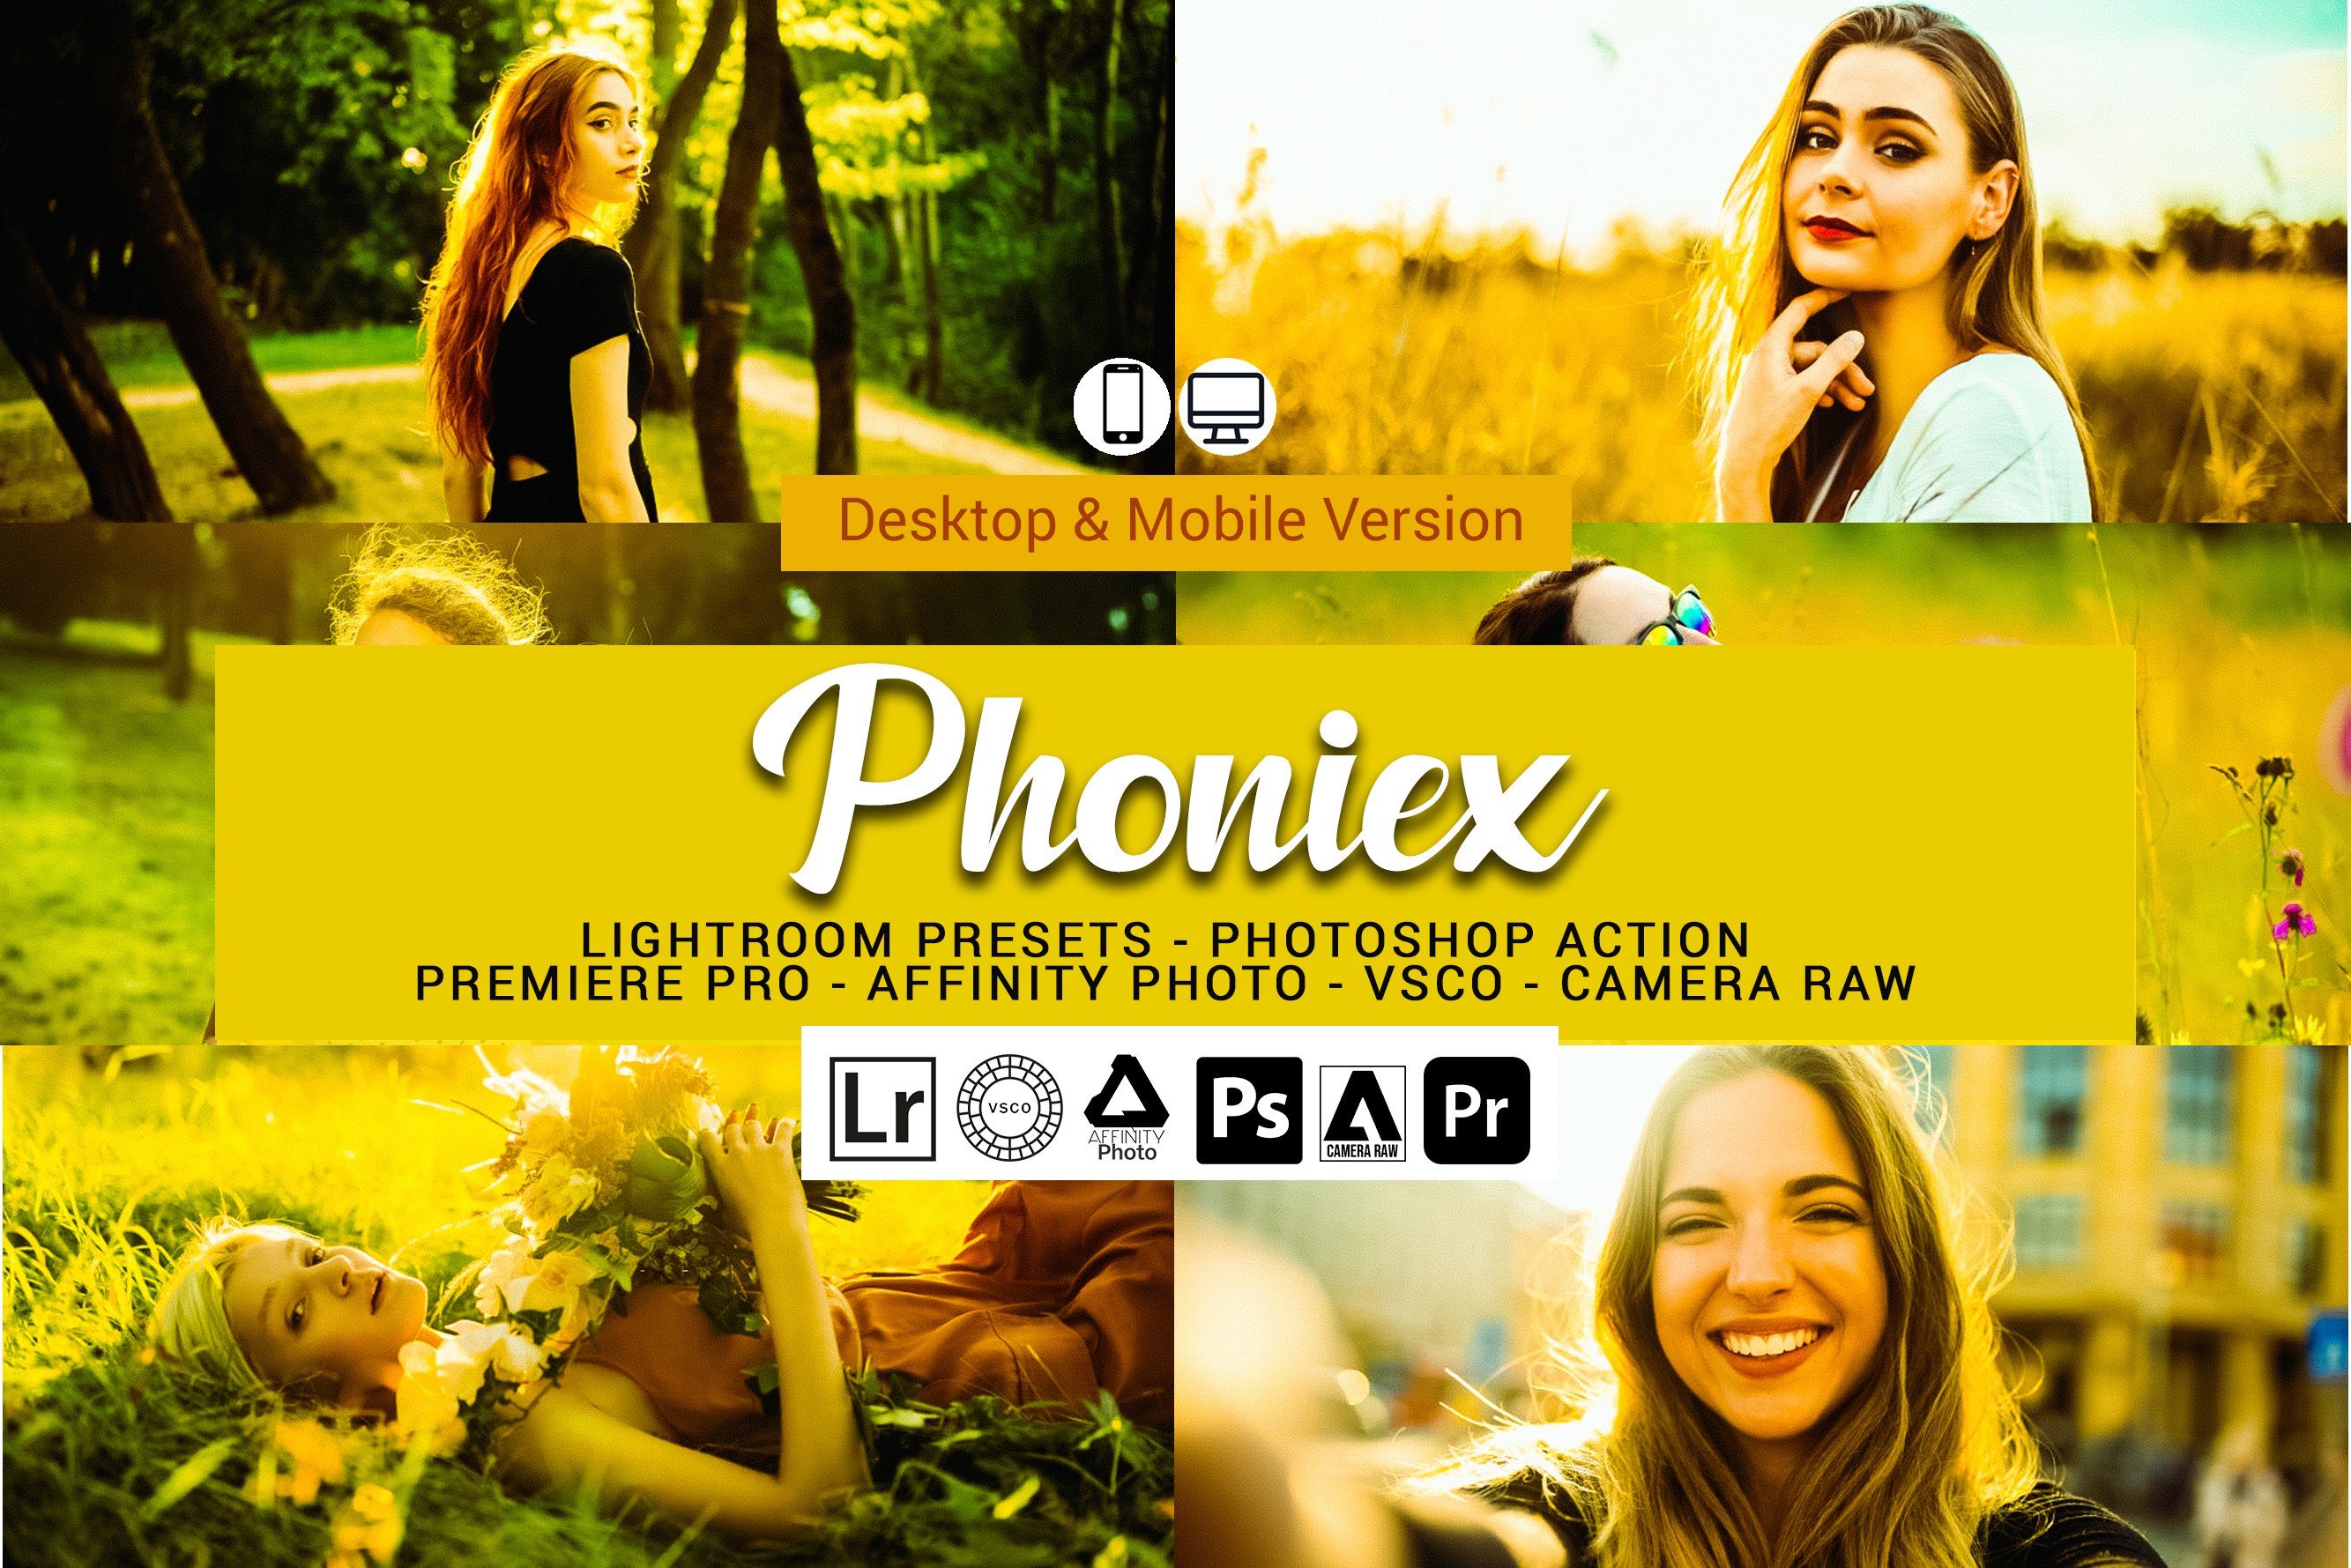 Phoniex Lightroom Presetscover image.